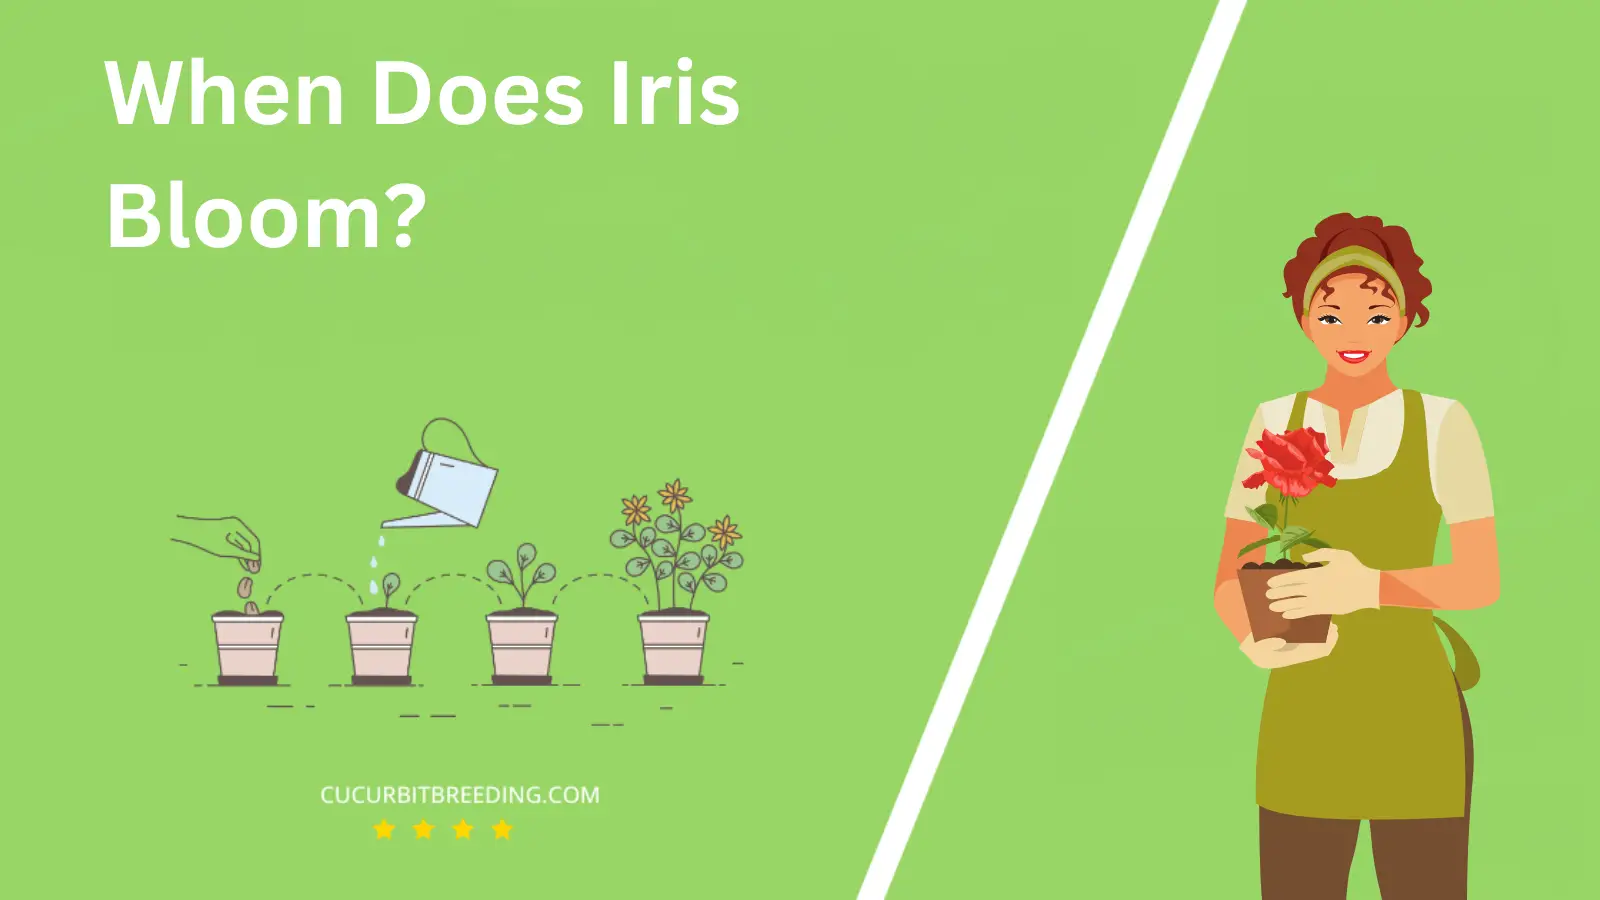 When Does Iris Bloom?